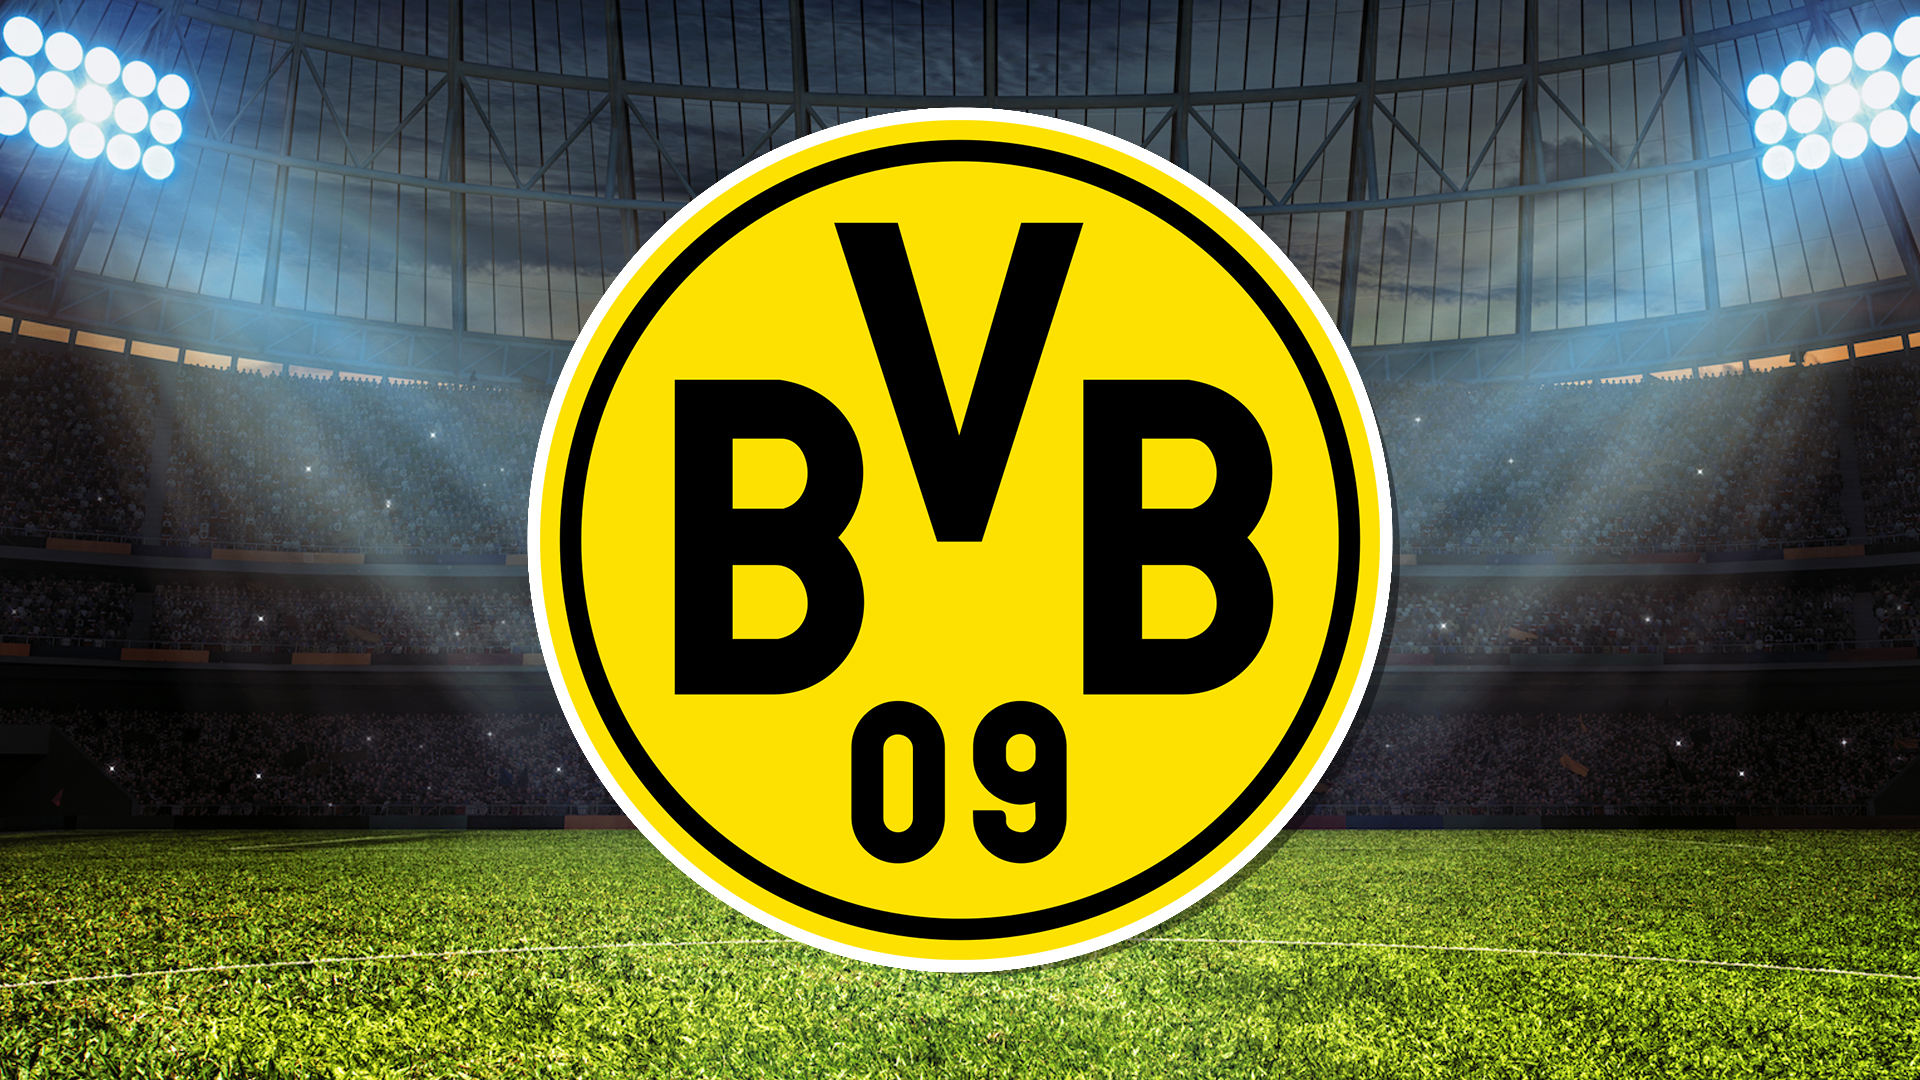 BVB badge with stadium background